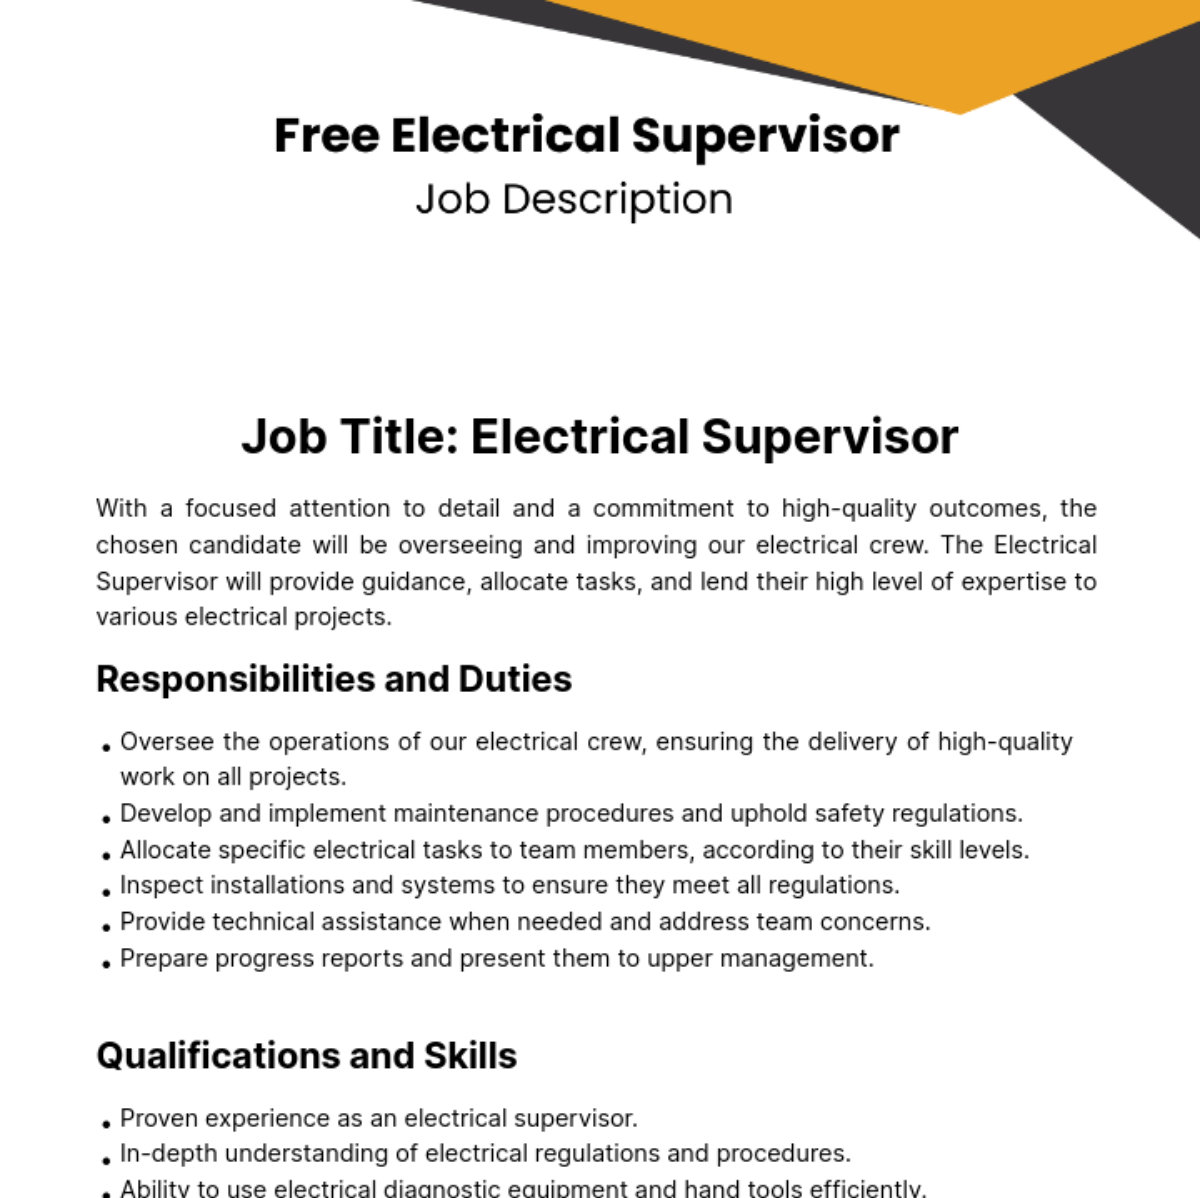 Free Electrical Supervisor Job Description Template